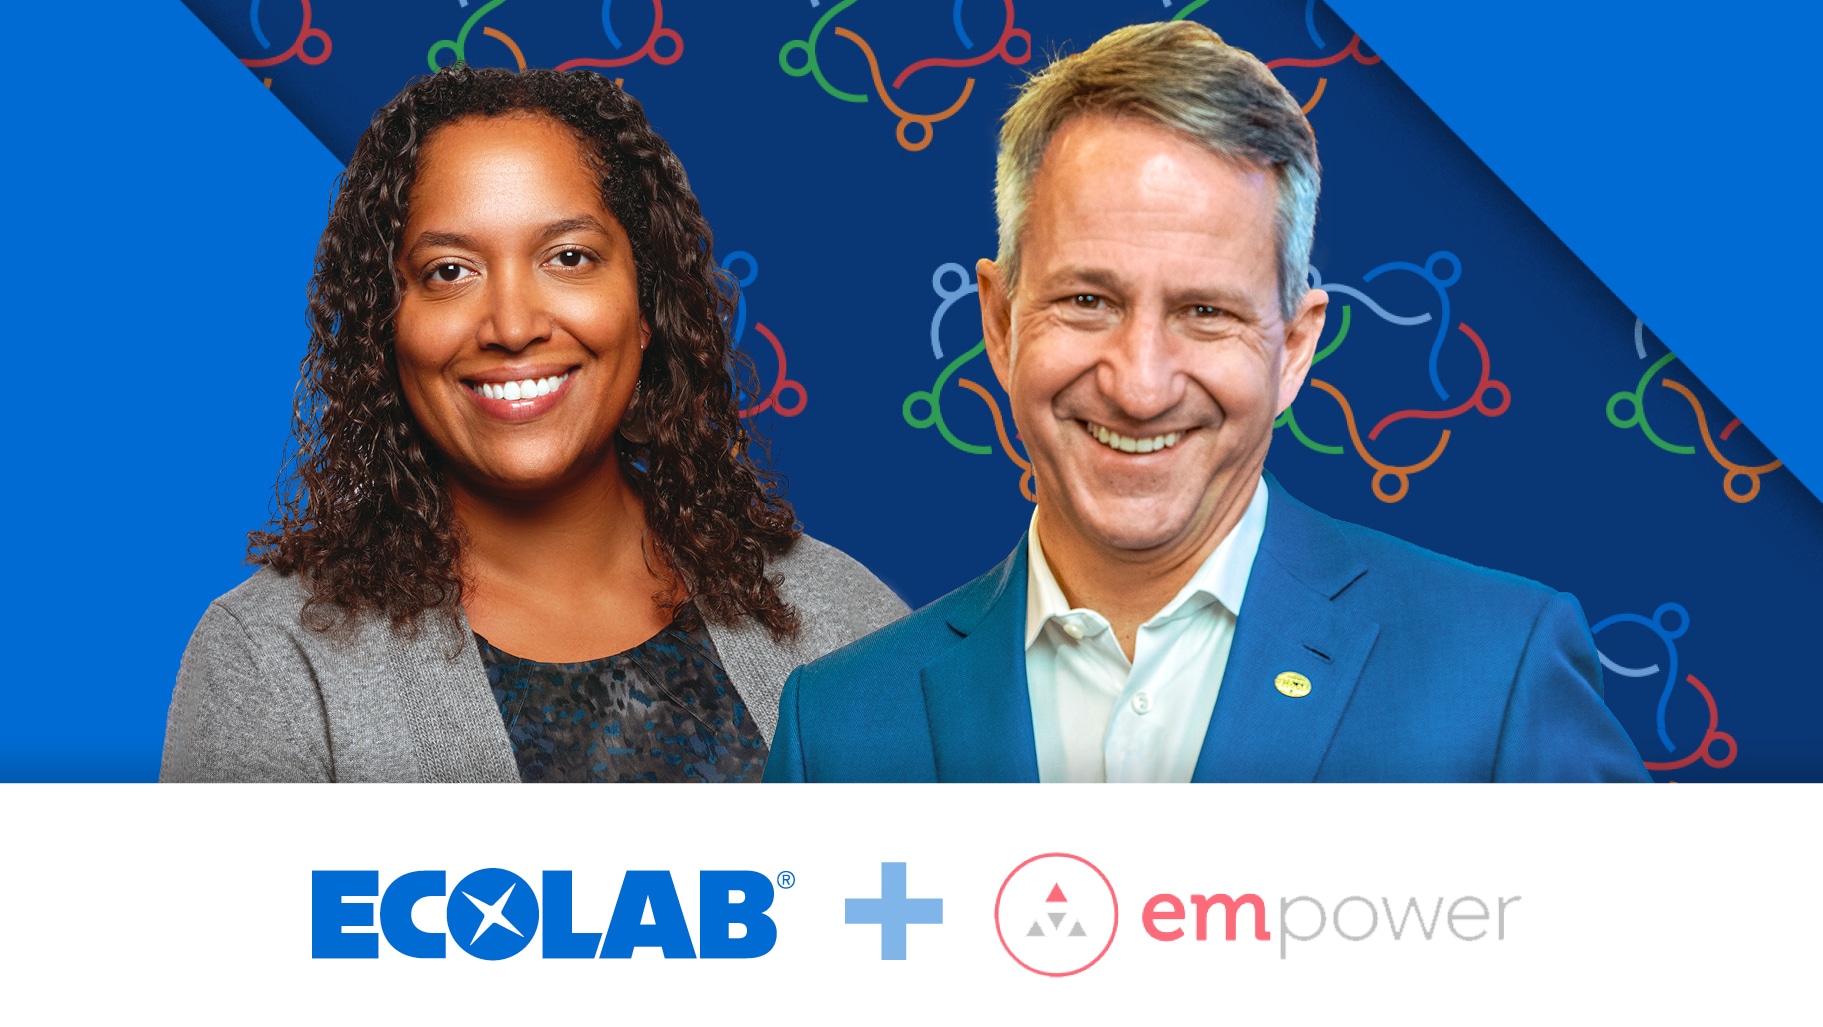 Prezes i dyrektor generalny Ecolab Christophe Beck oraz dyrektor ds. marketingu Gail Peterson na liście INvolve 2023 Empower Role Model ​​​​​​​